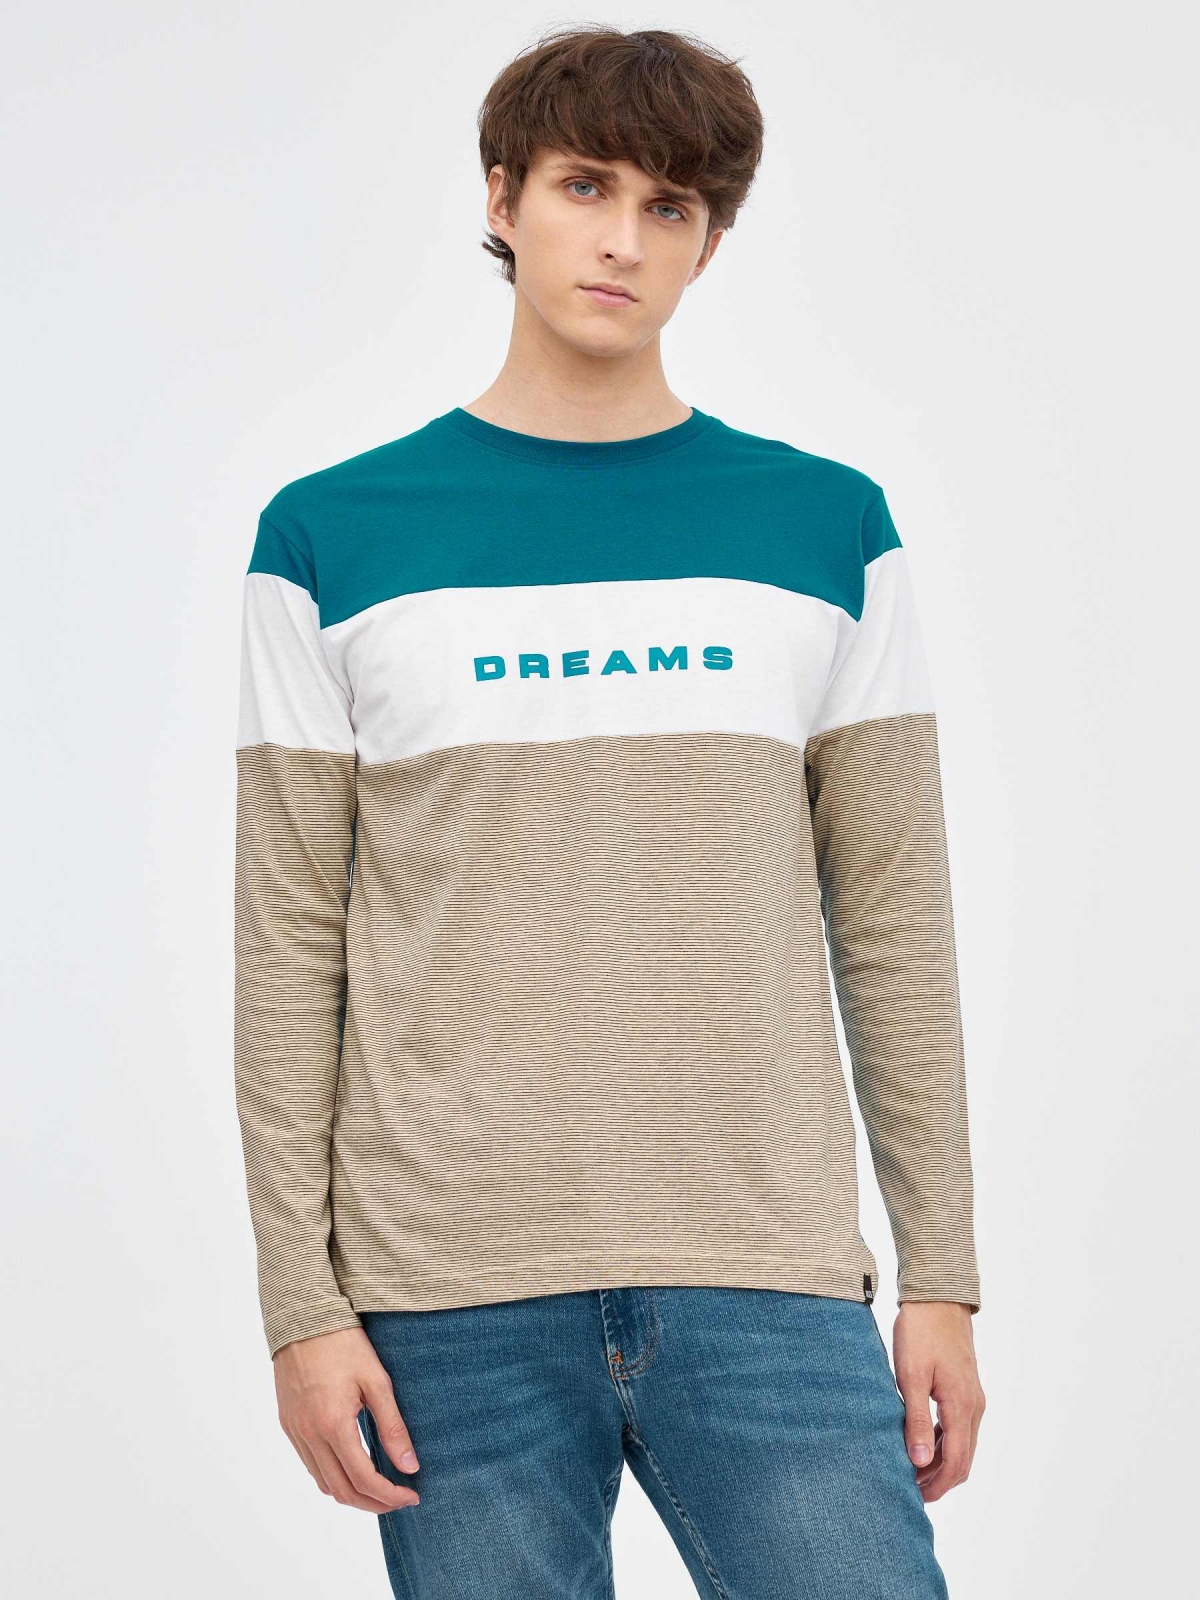 T-shirt Dreams bege vista meia frontal